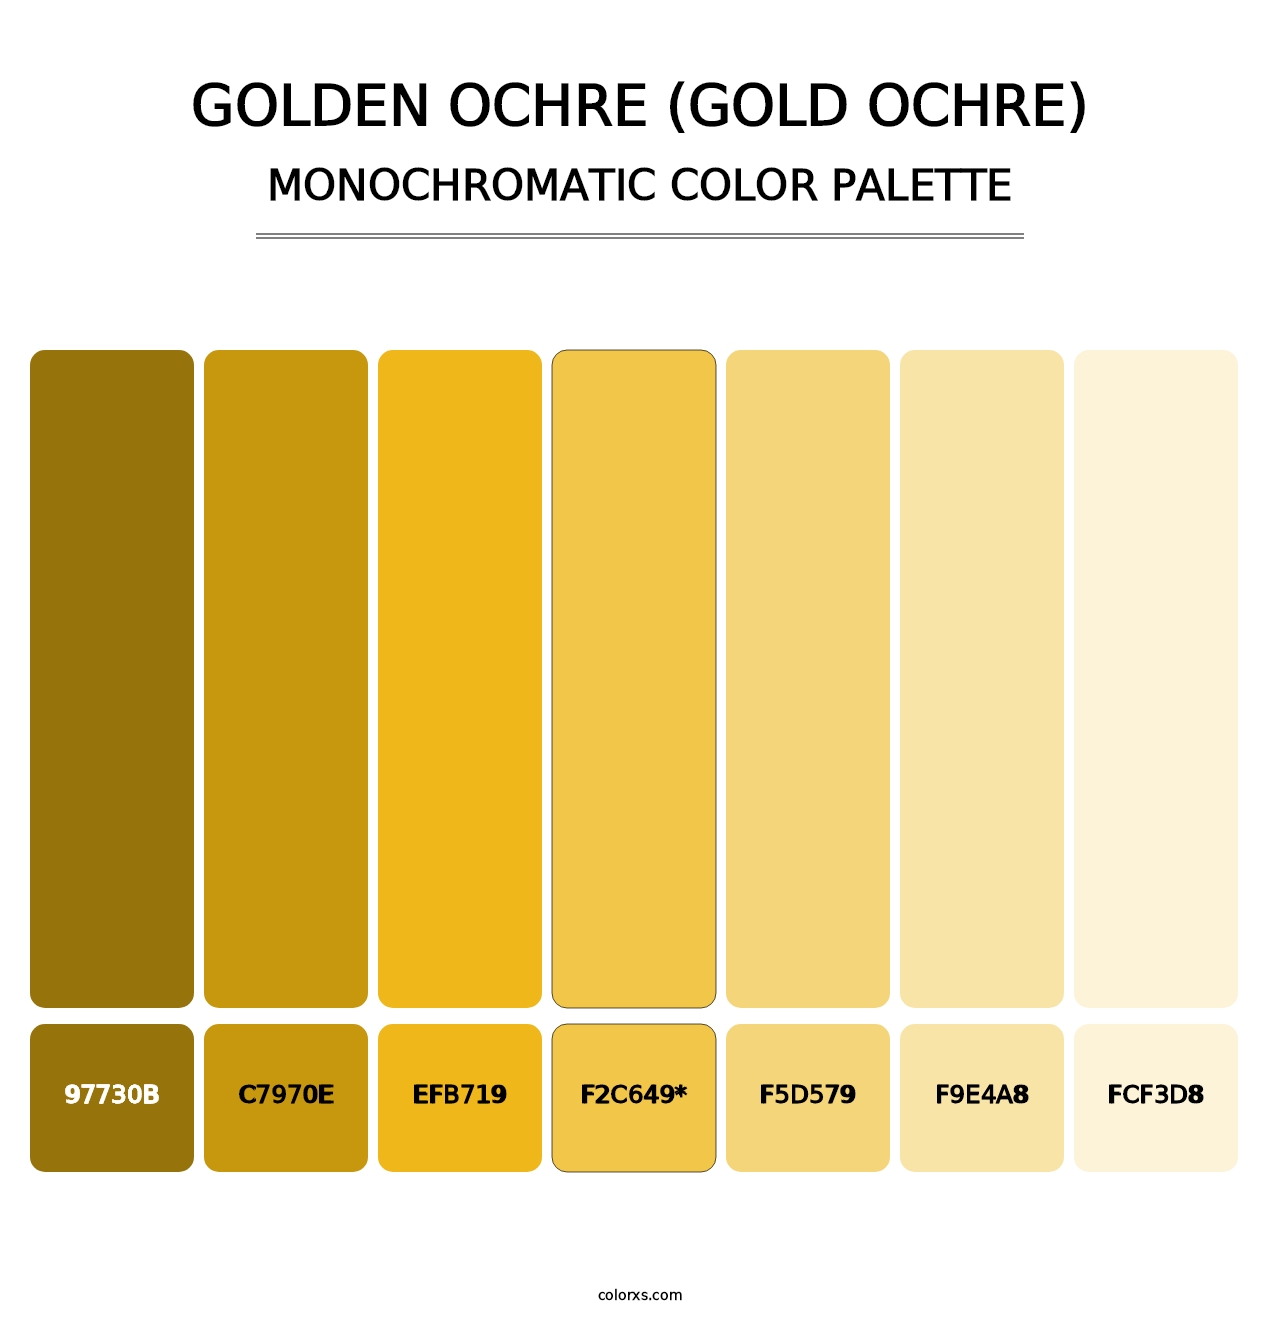 Golden Ochre (Gold Ochre) - Monochromatic Color Palette